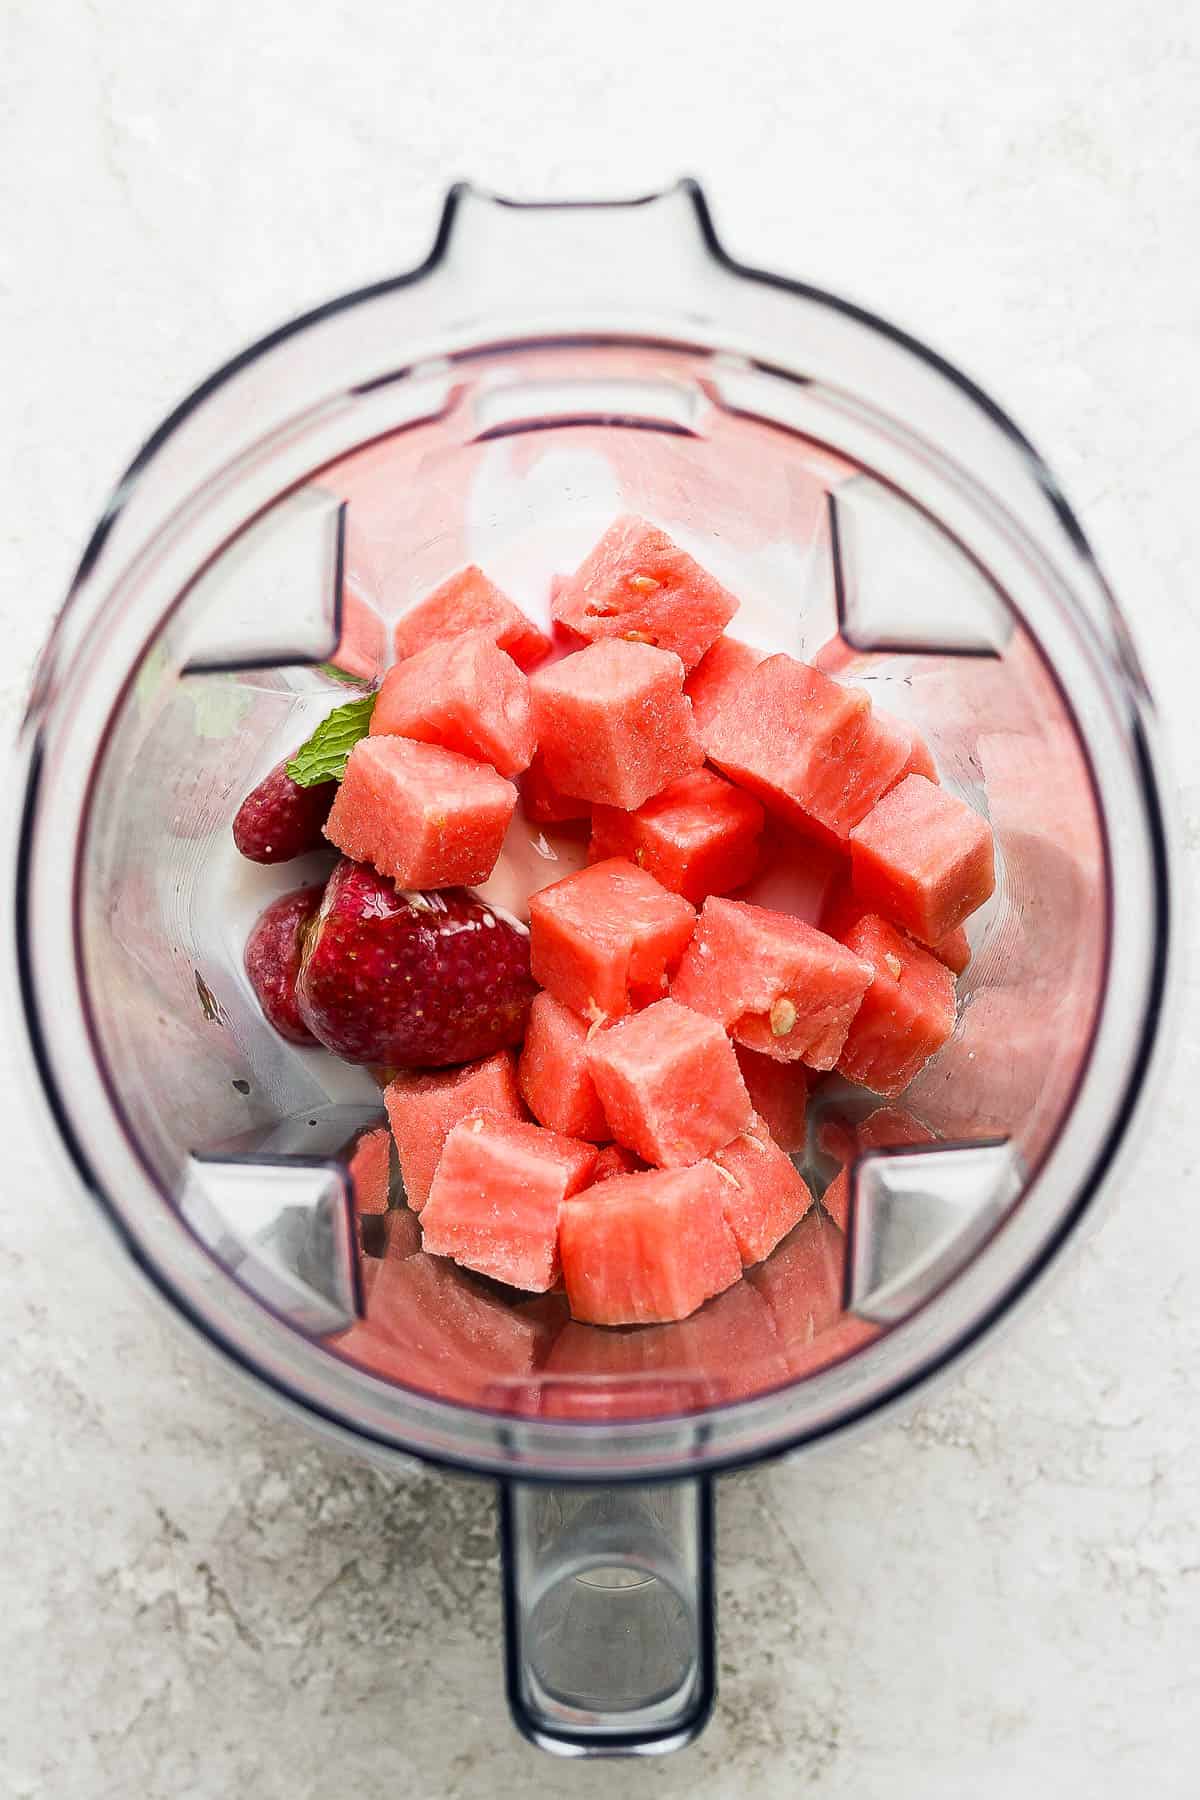 Watermelon smoothie ingredients in a blender.